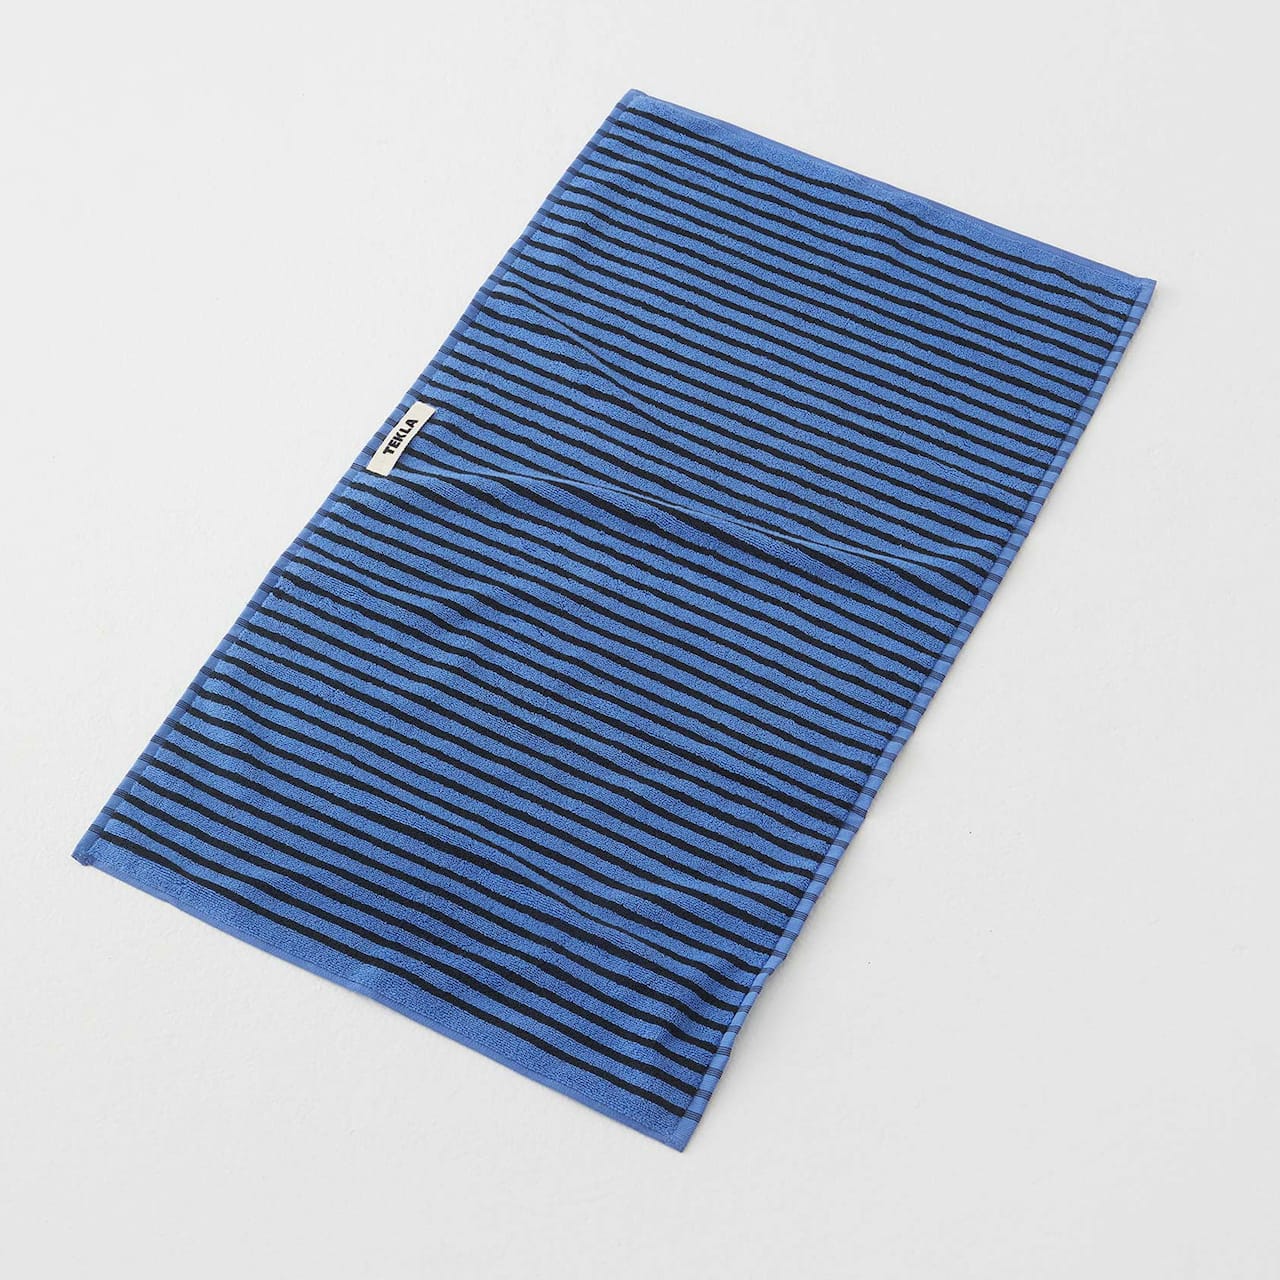 Terry Towel Striped Blue  Black